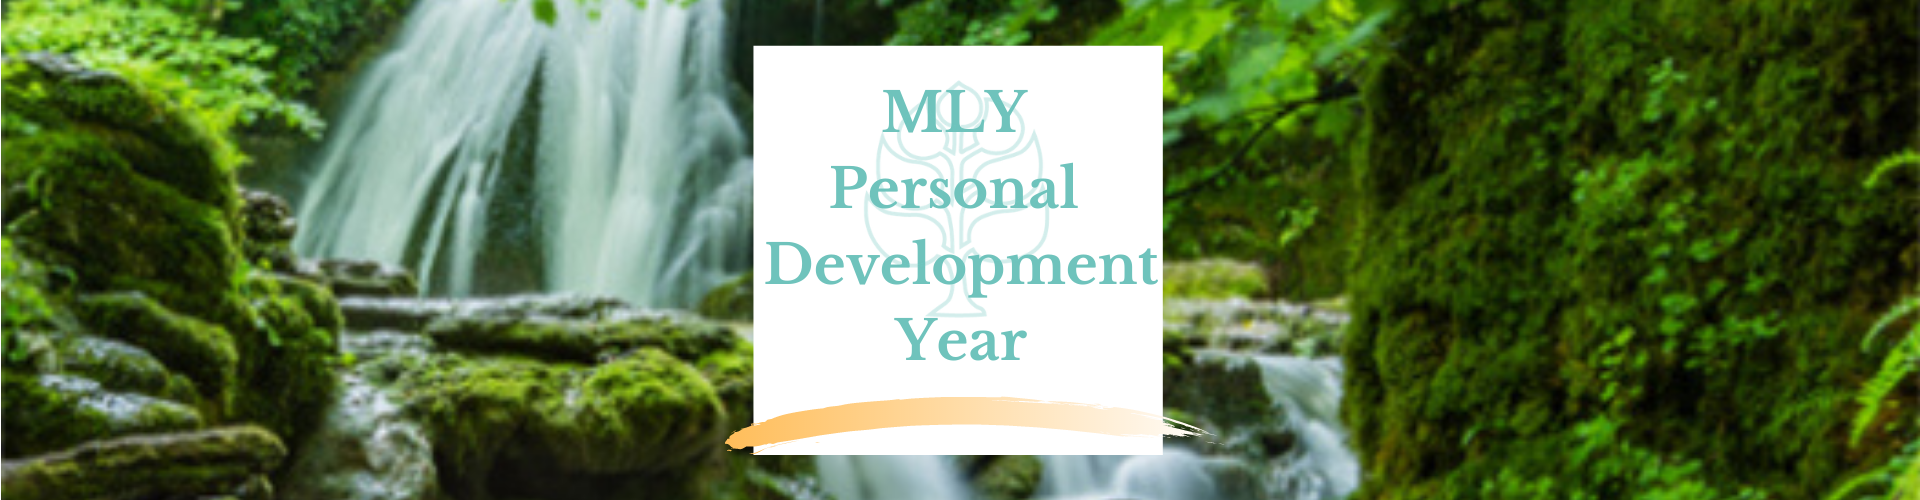 MLY Personal Development Year